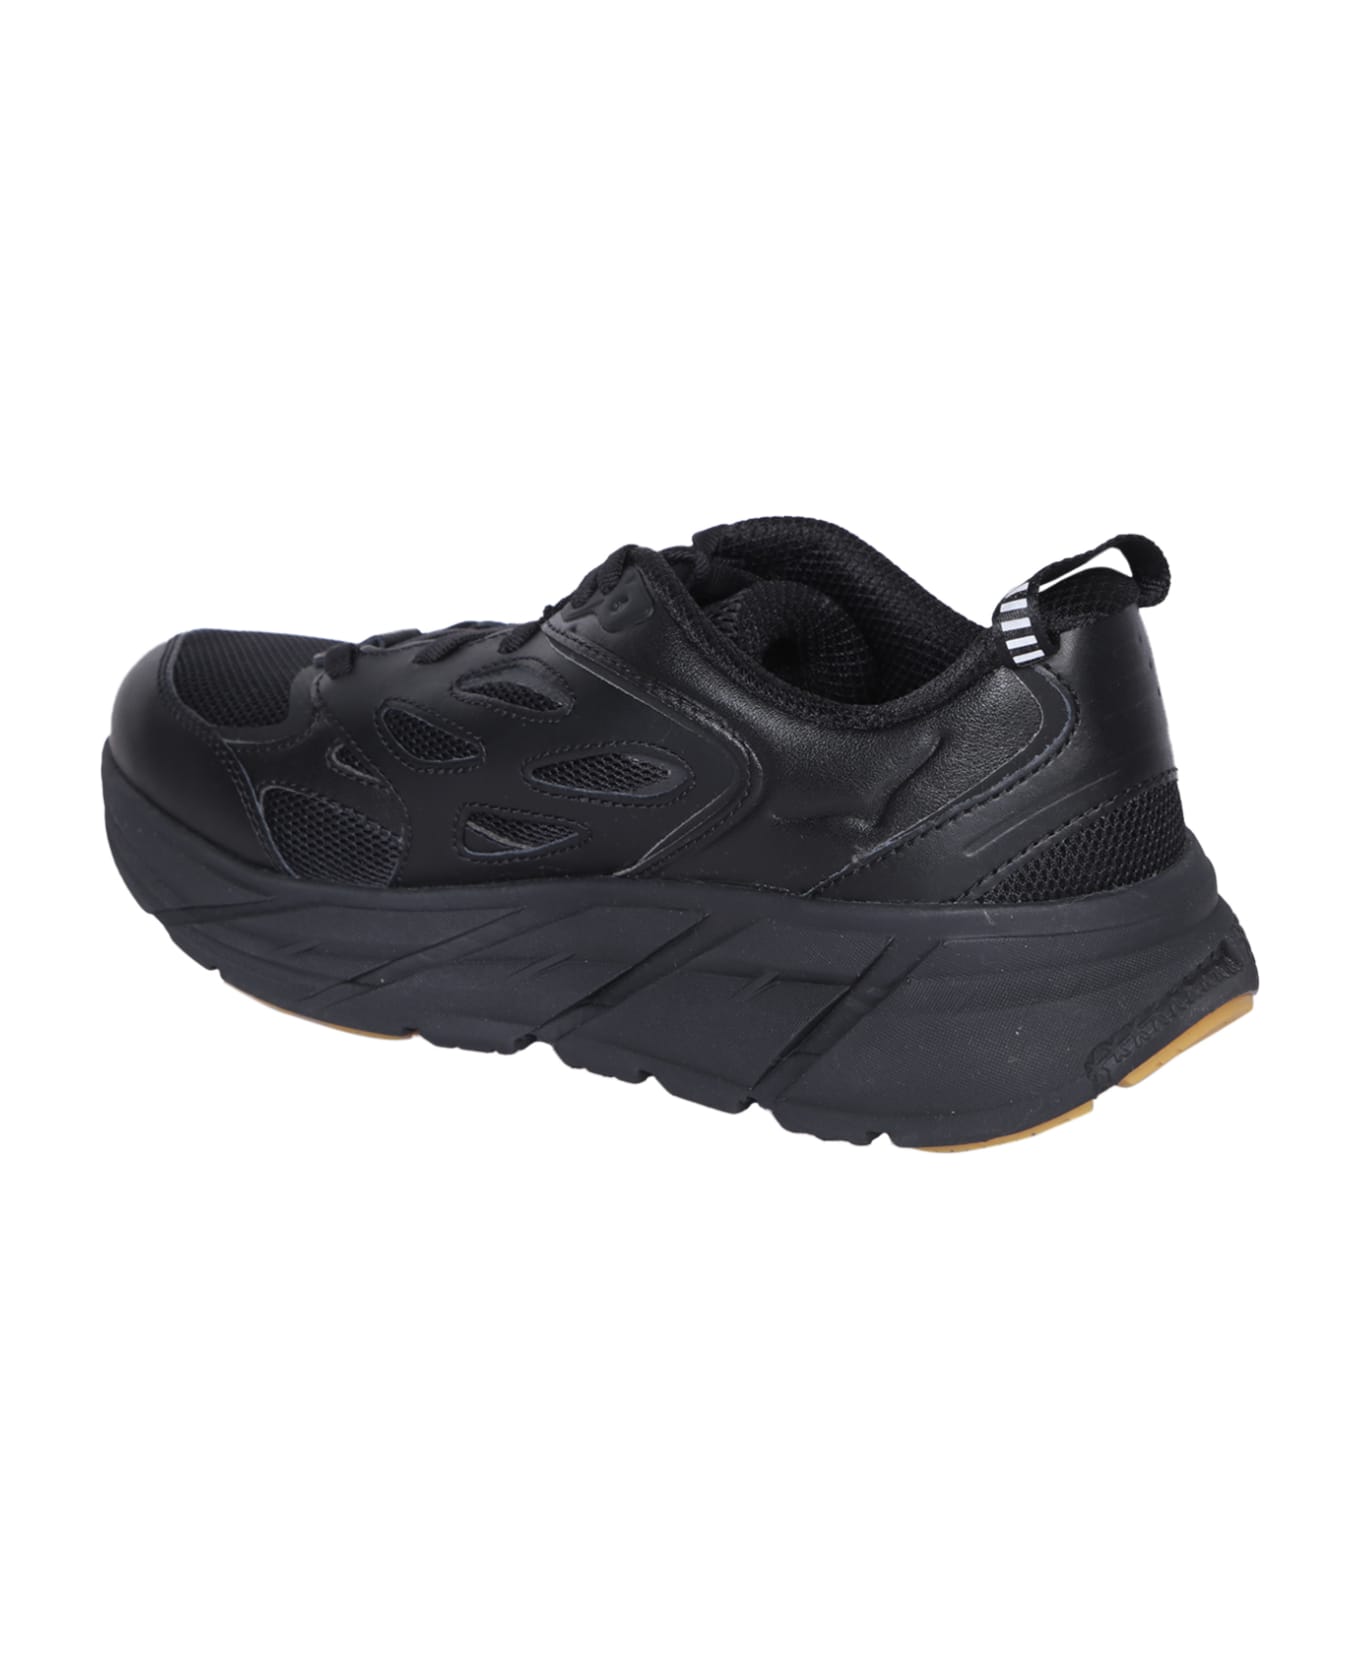 Hoka One One Clifton L Black Sneakers - Black スニーカー